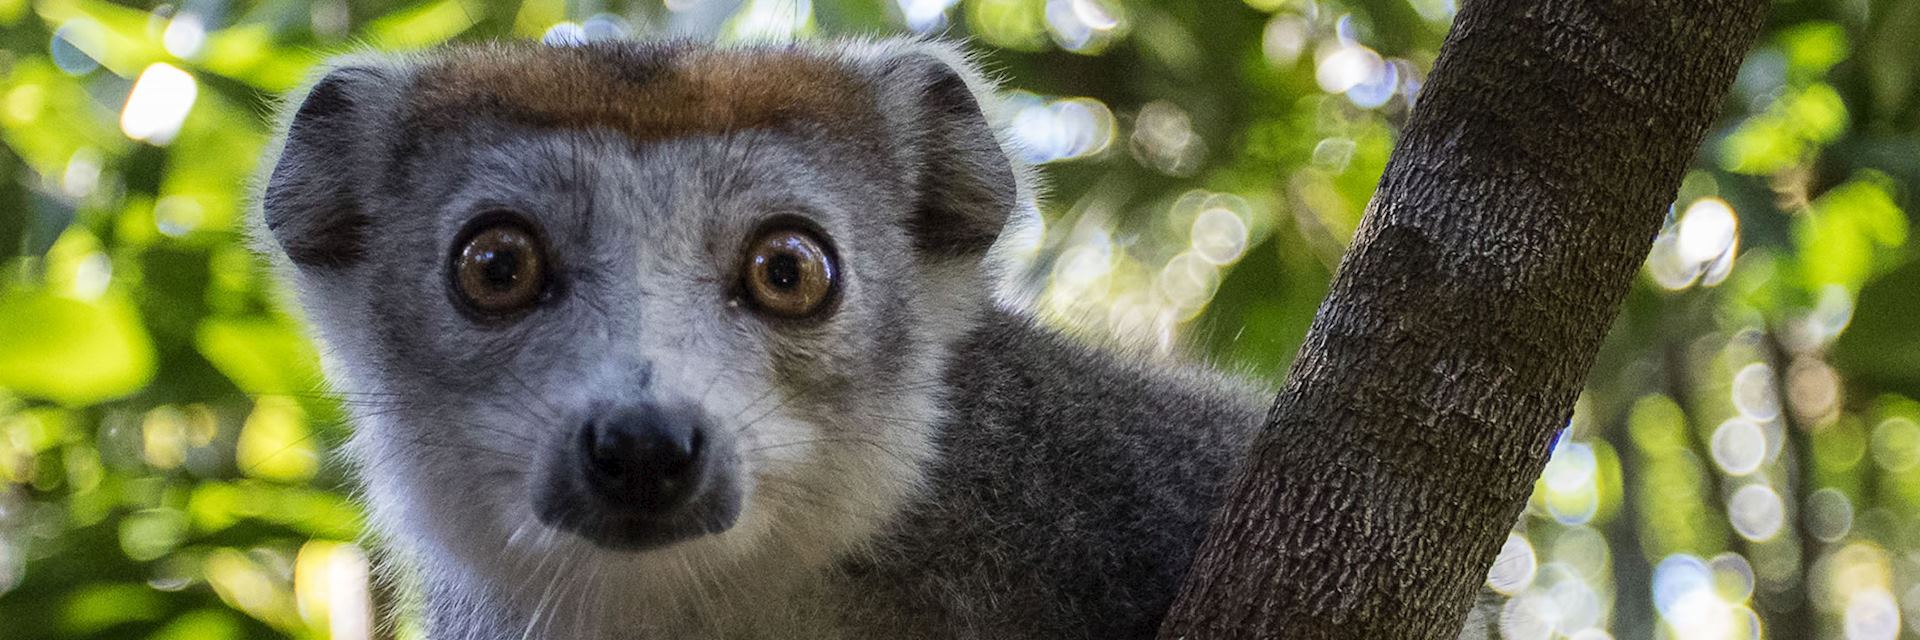 Lemur in tree, Madagascar